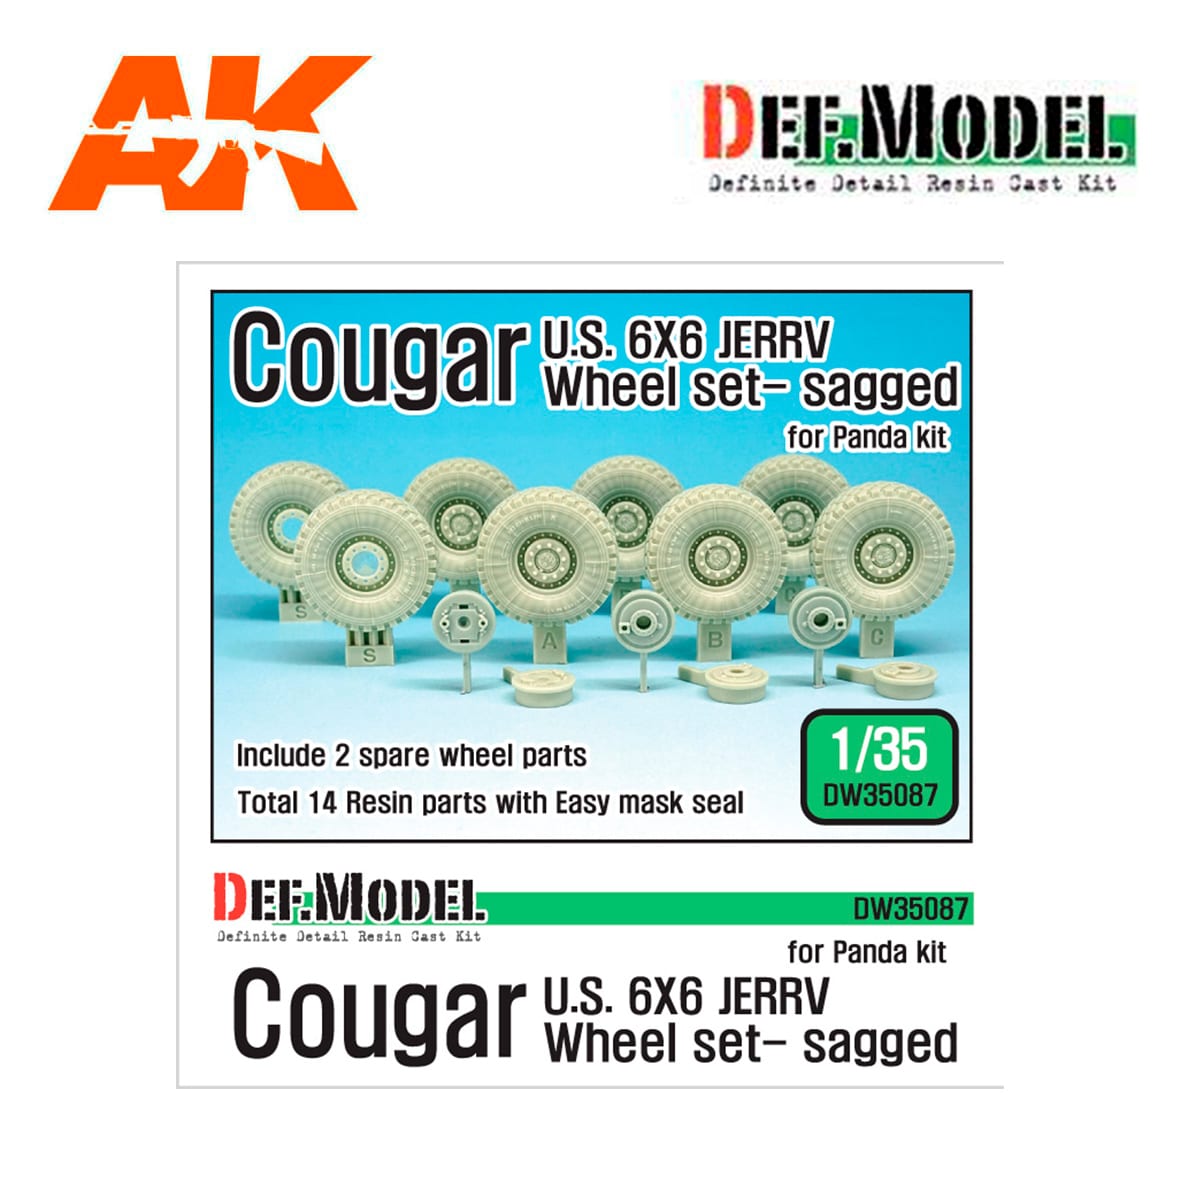 U.S. Cougar 6X6 JERRV Sagged Wheel set – 2 Spare wheel (for Panda 1/35)